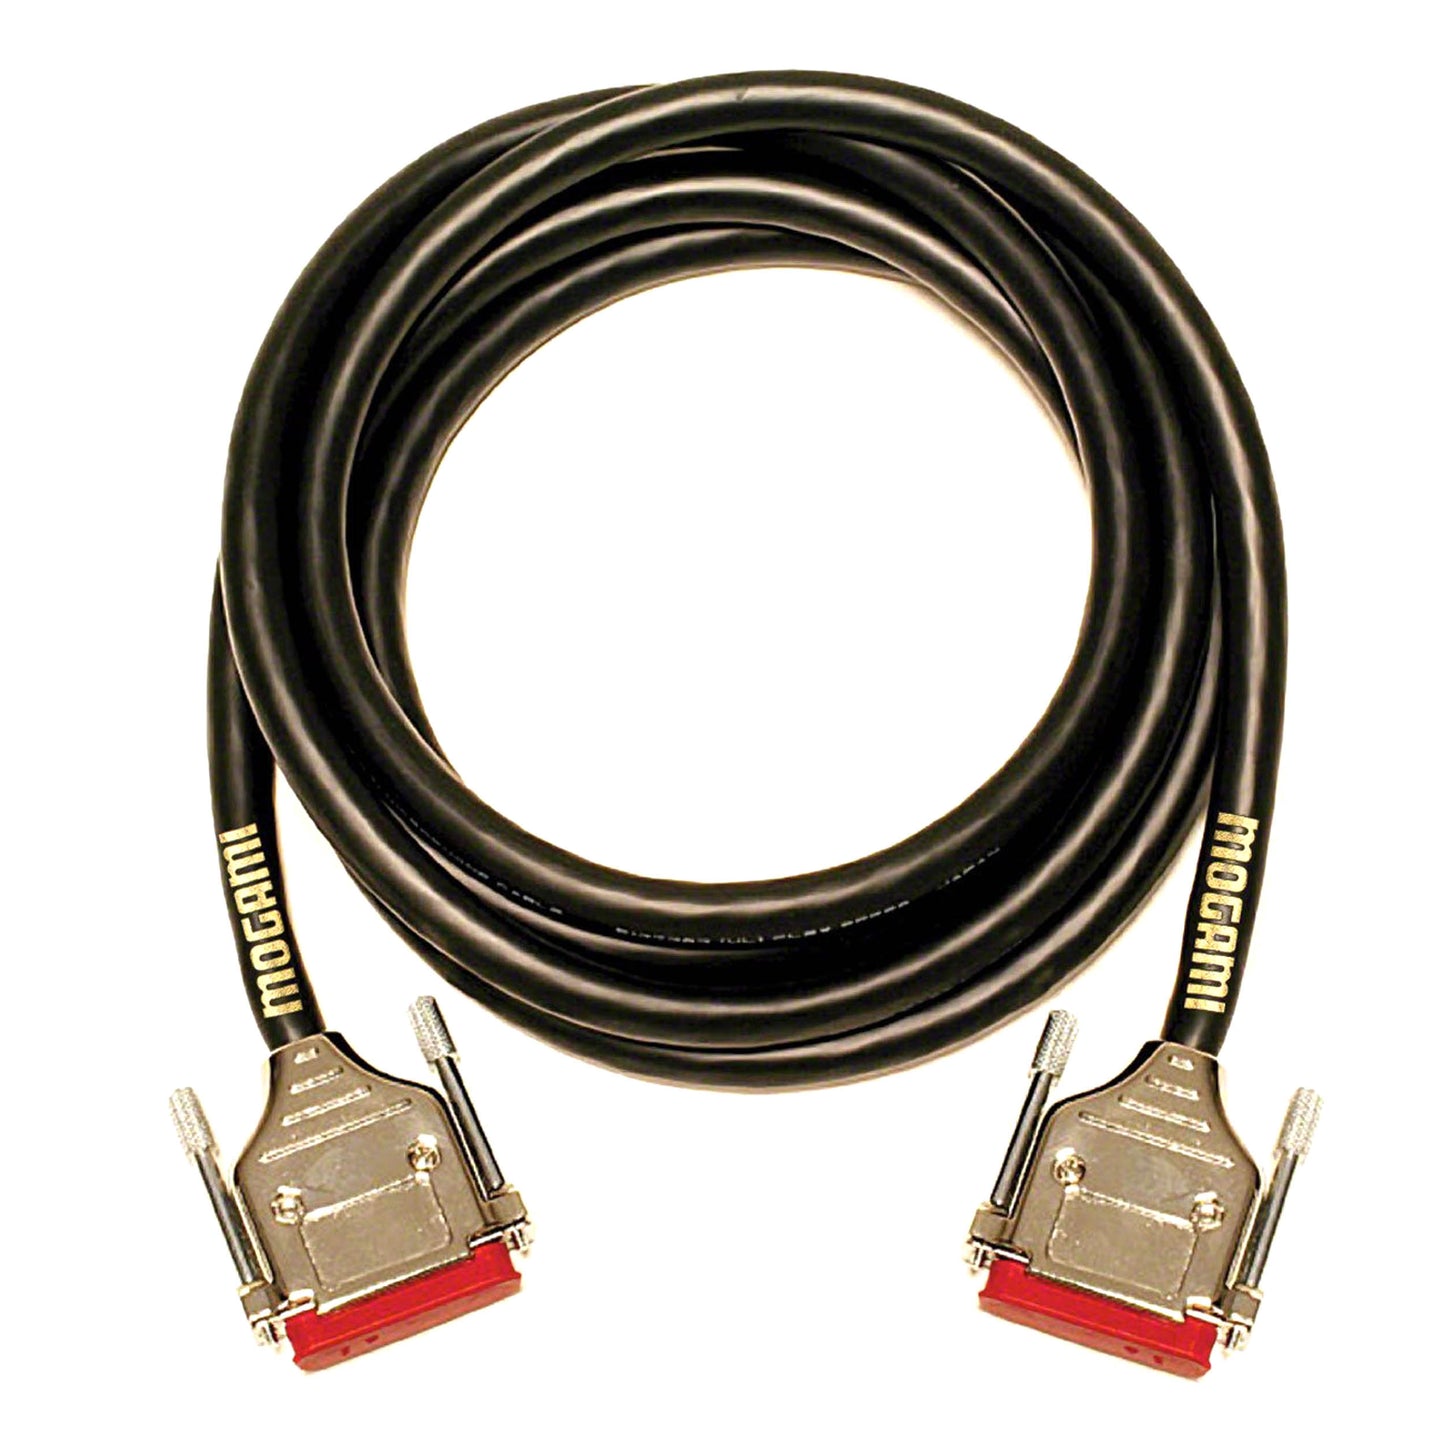 Mogami Gold AES/EBU DB-25 Male to DB-25 Male Digital Audio Cable